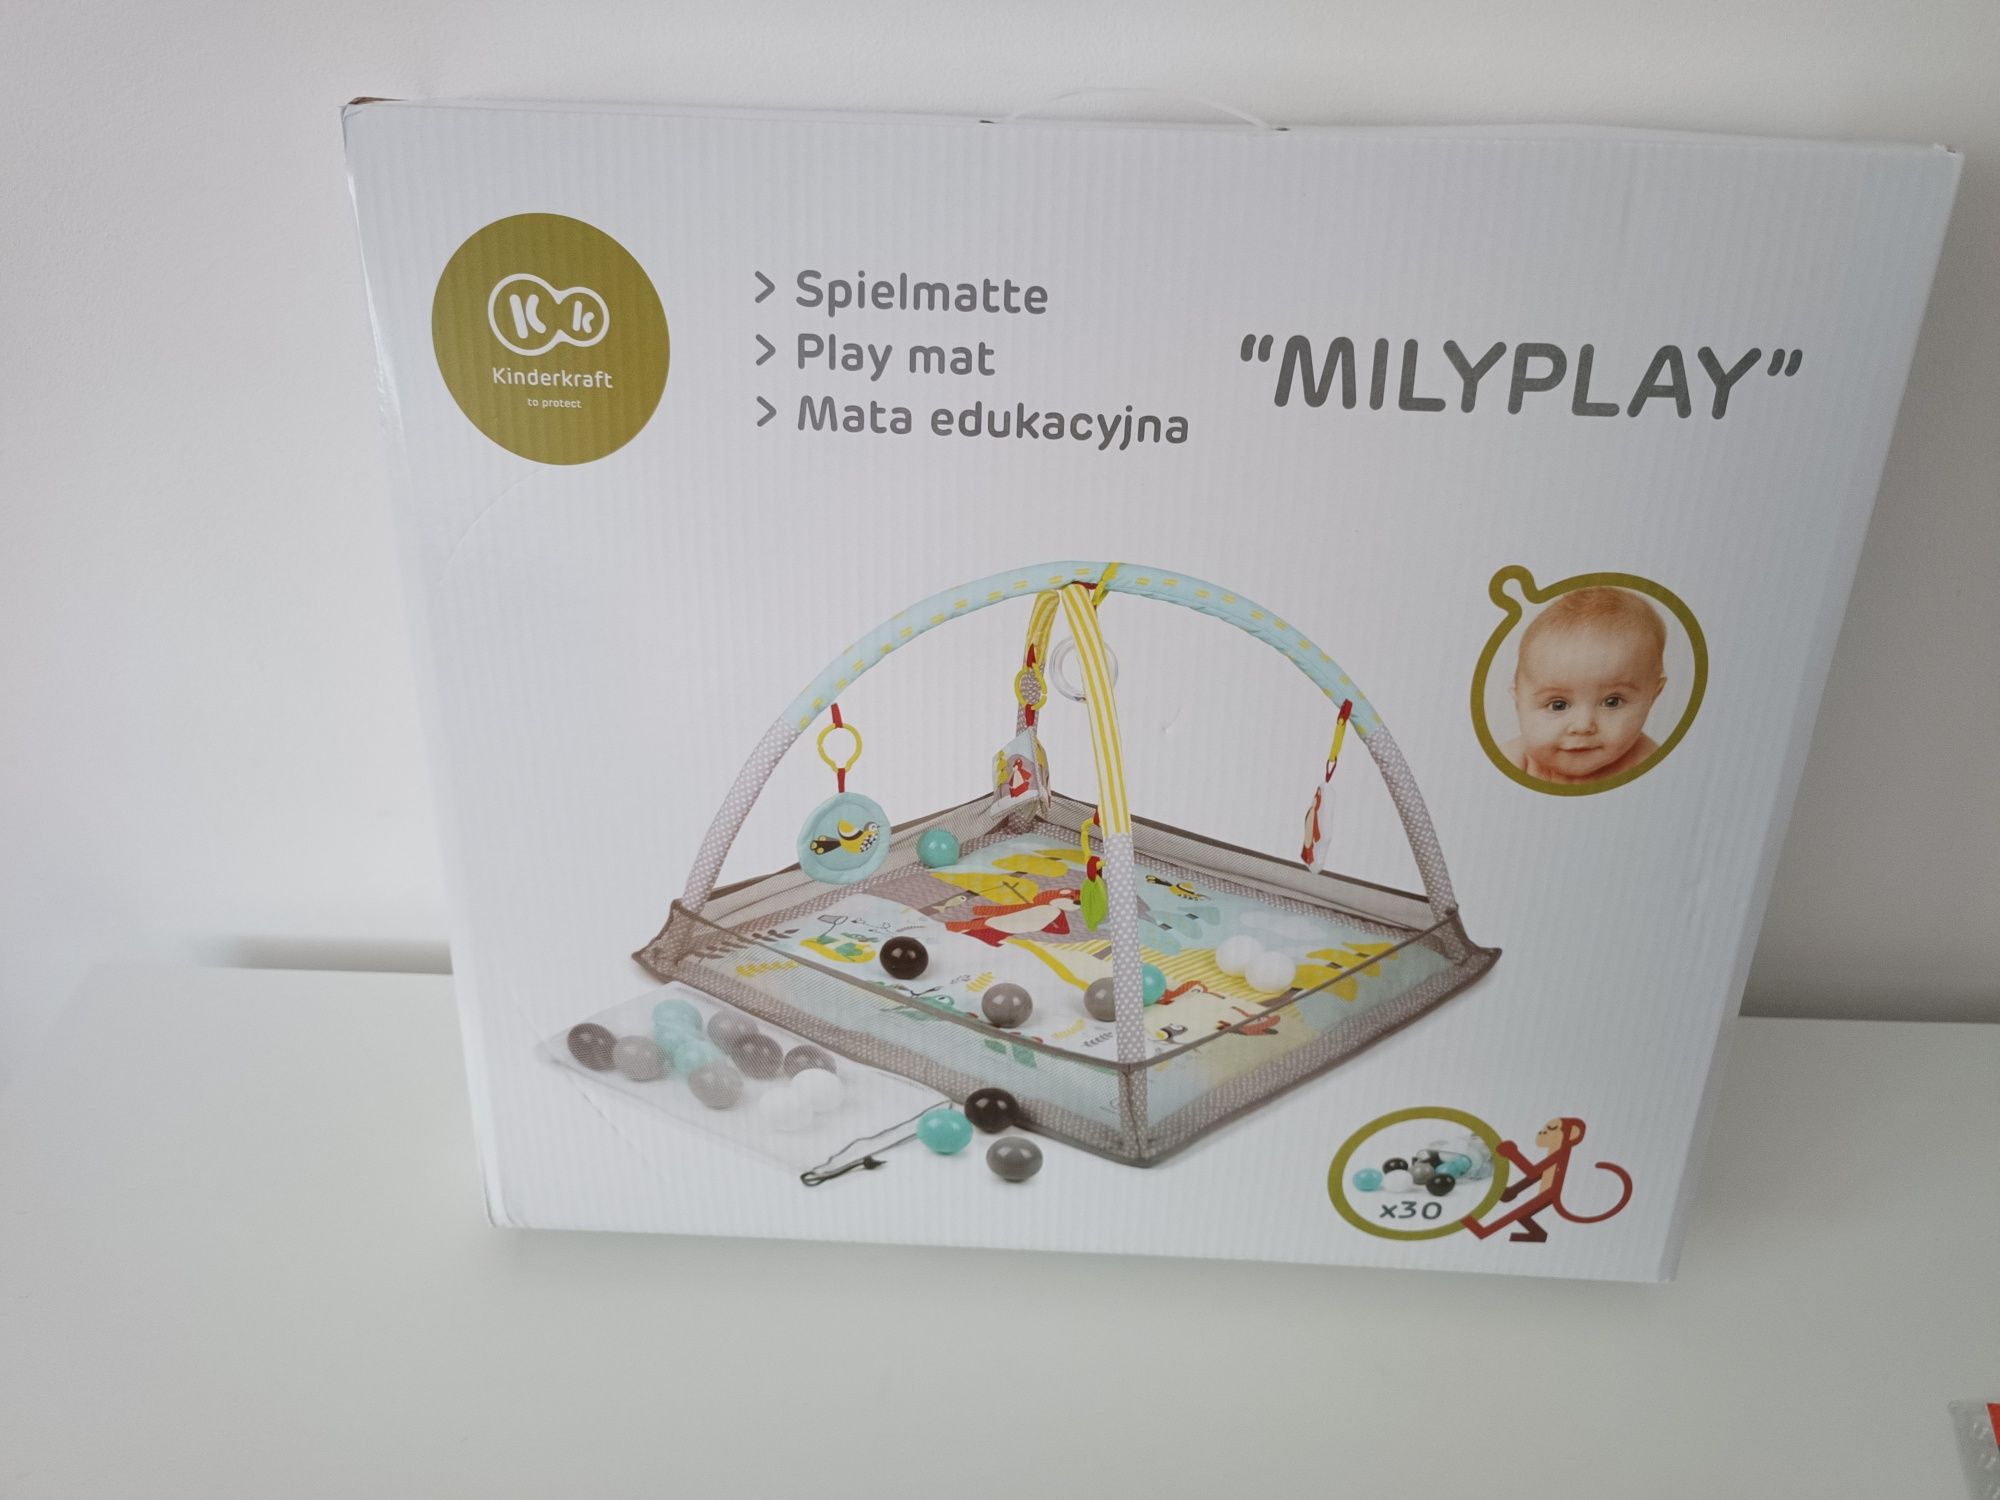 Nowa mata edukacyjna i kojec Kinder Kraft MilyPlay